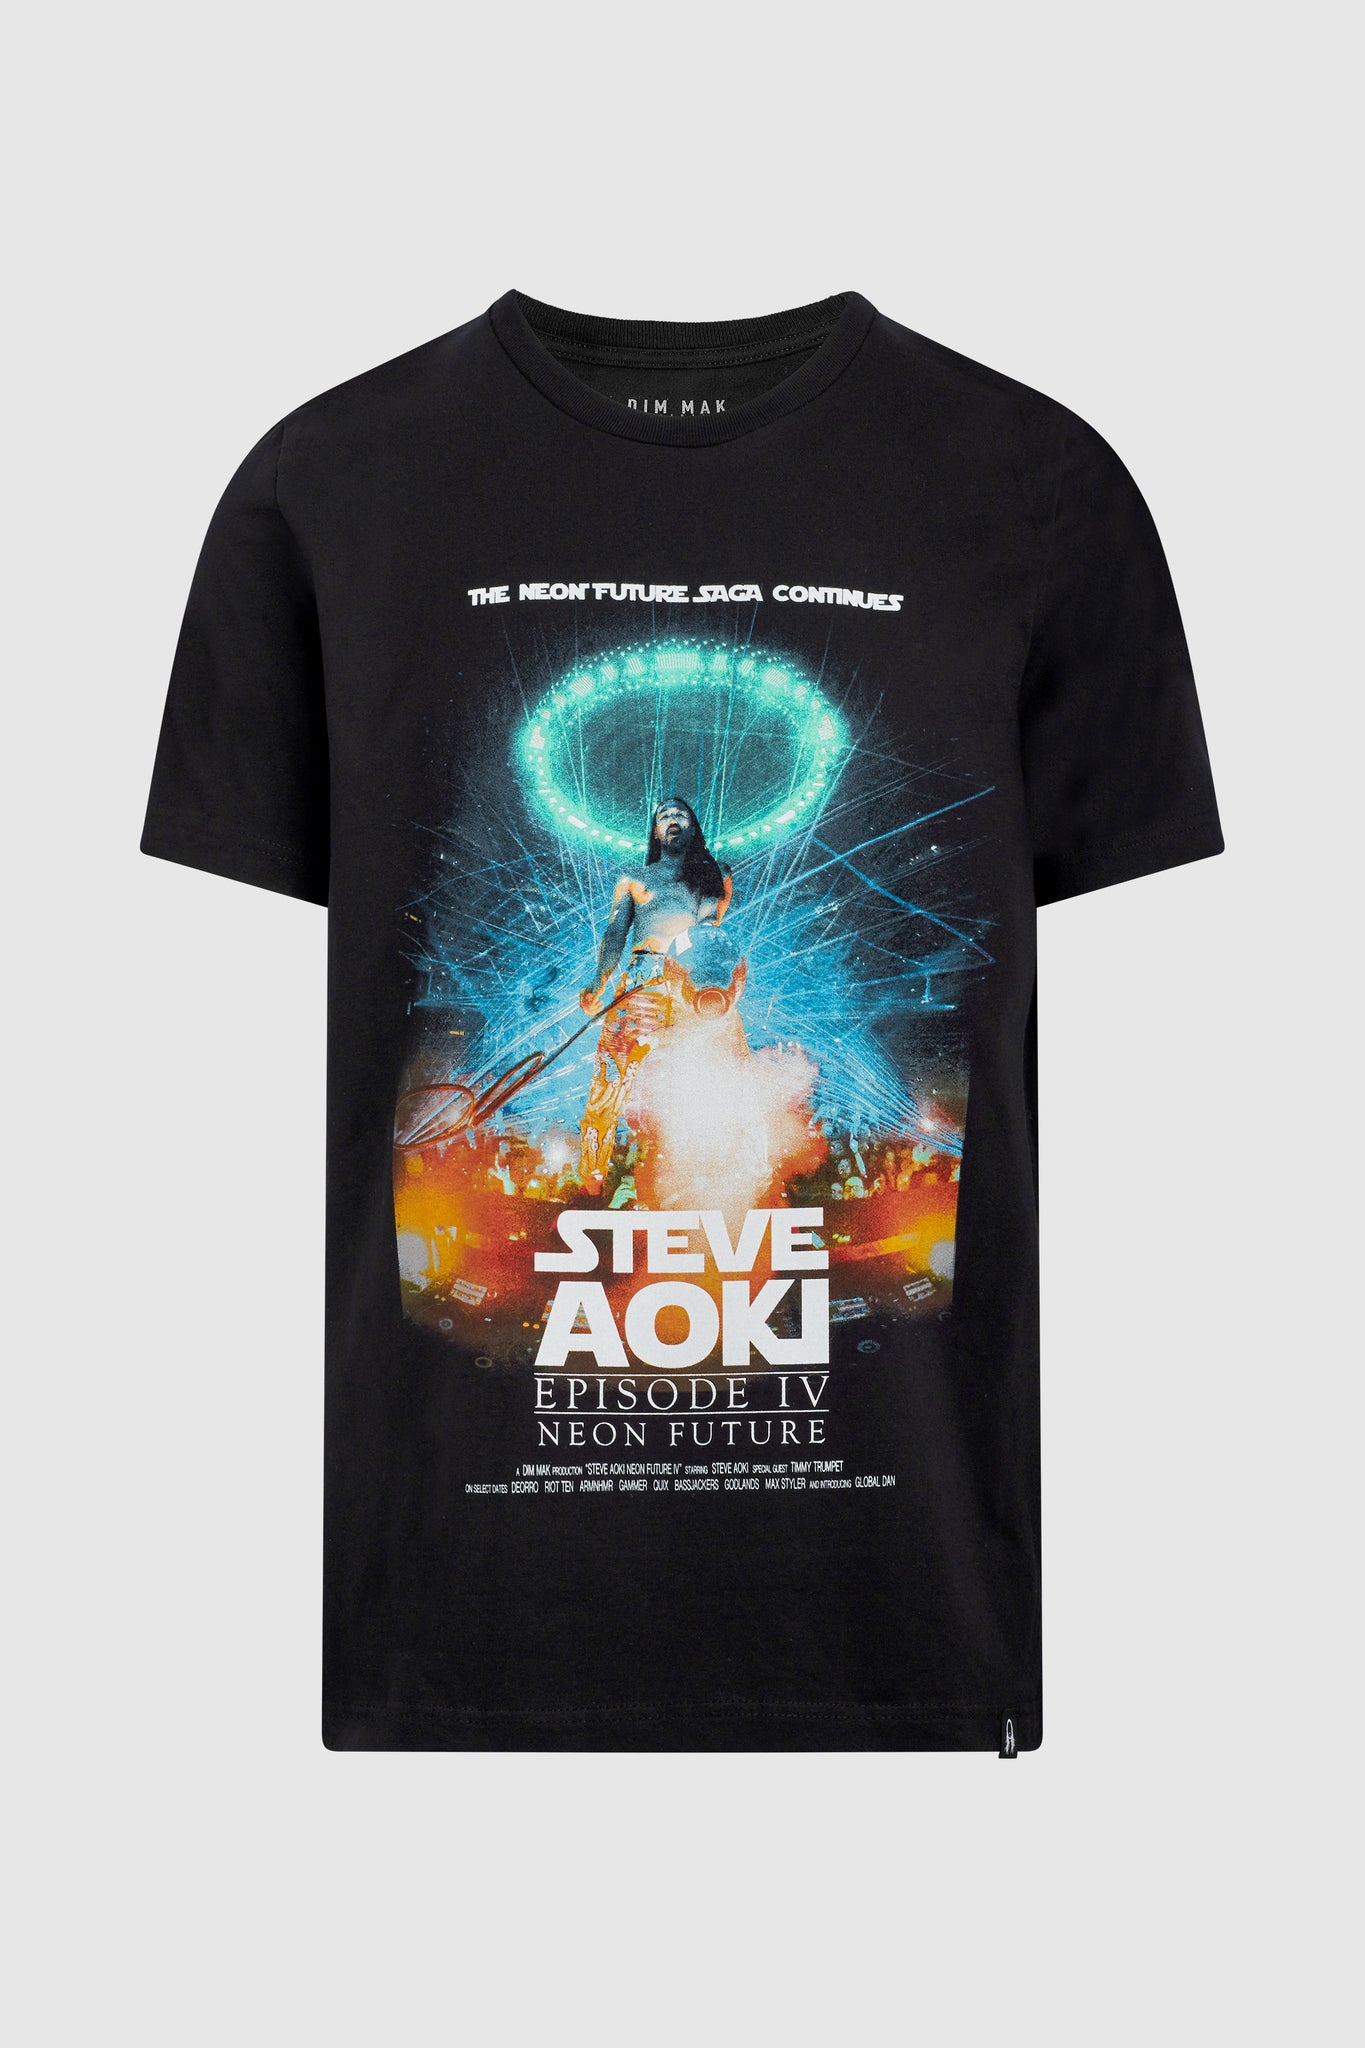 Neon Future IV - Steve Aoki Episode IV Tee